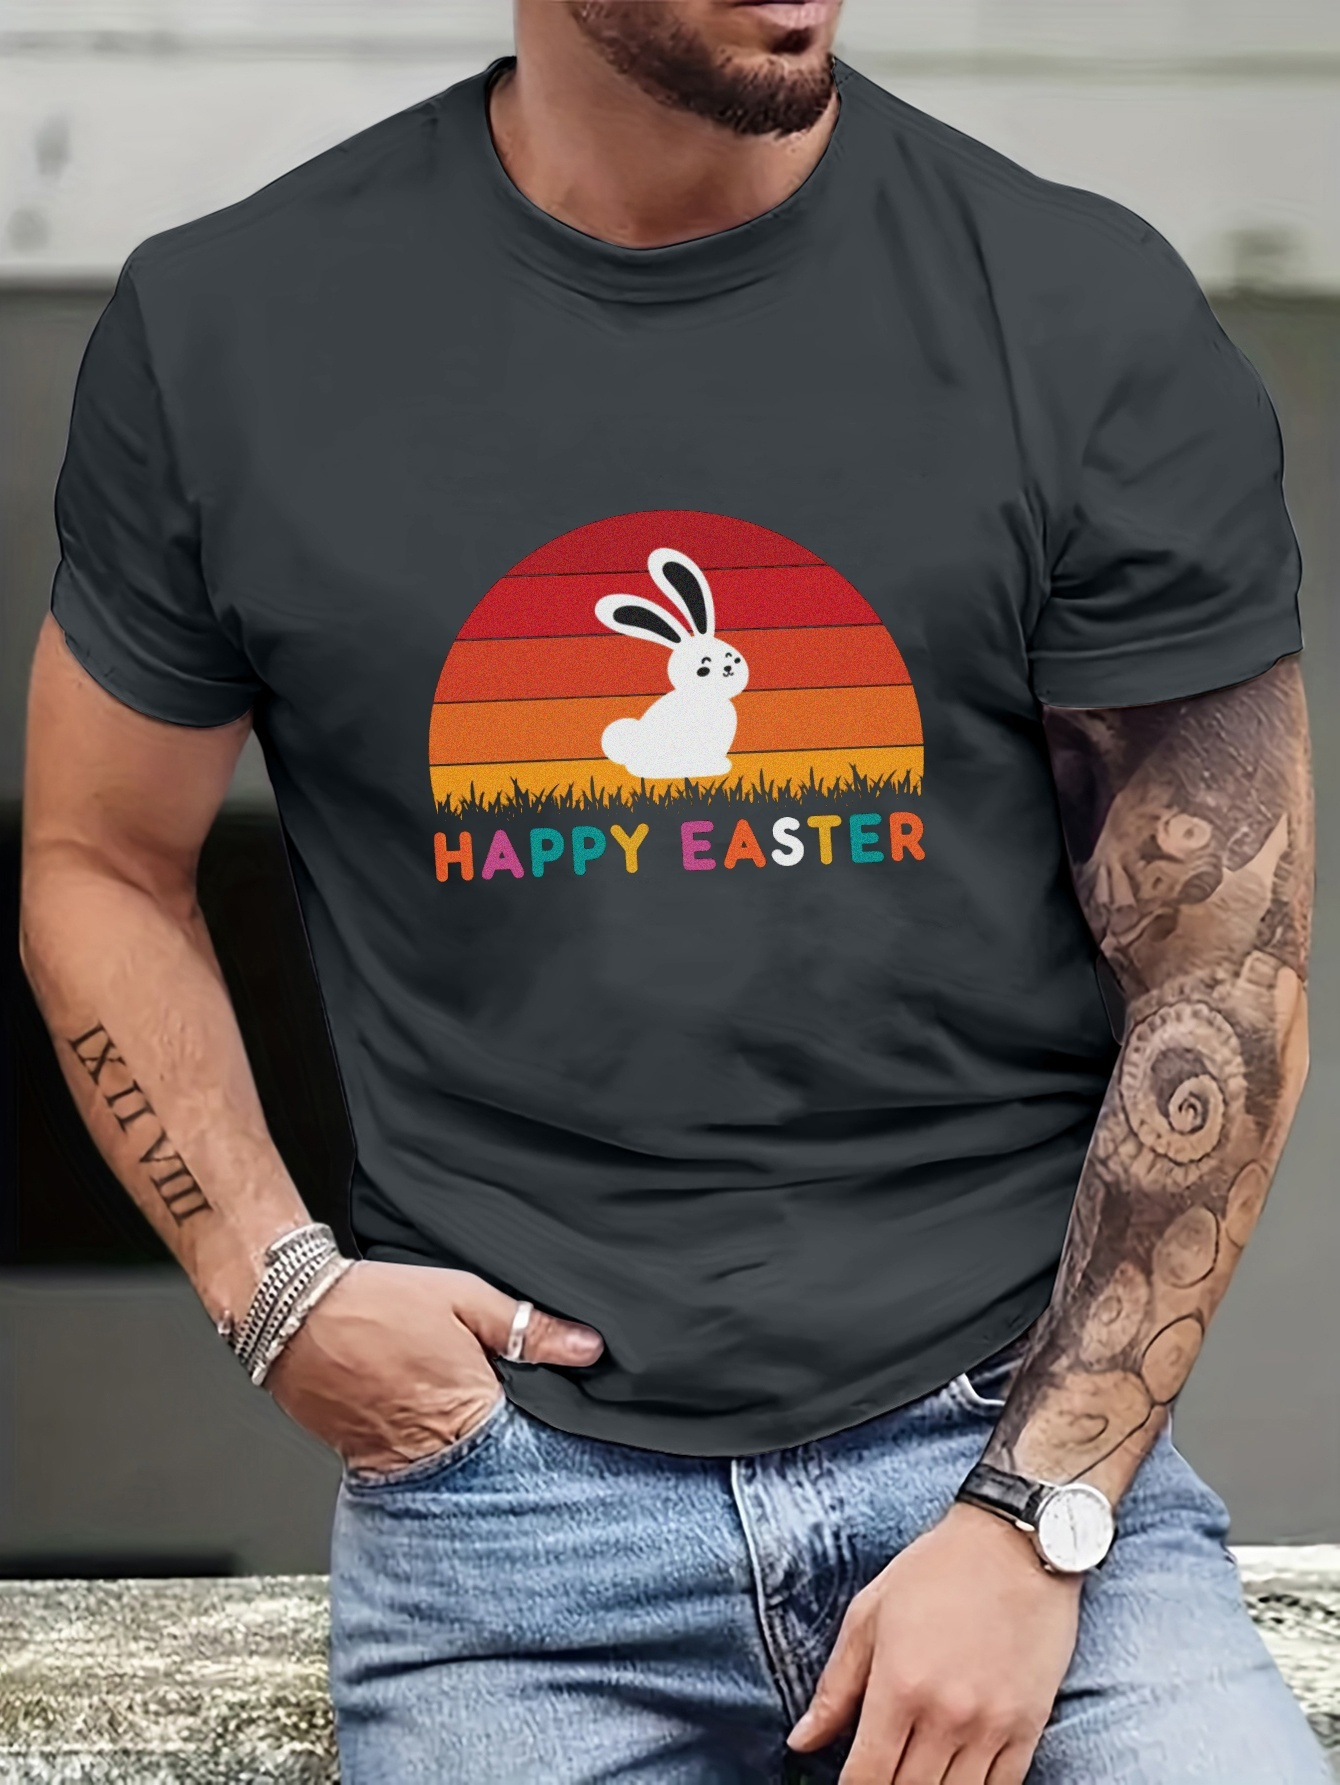 Easter Shirts for Men Shirts for Men Mens Easter Day Happy Easter